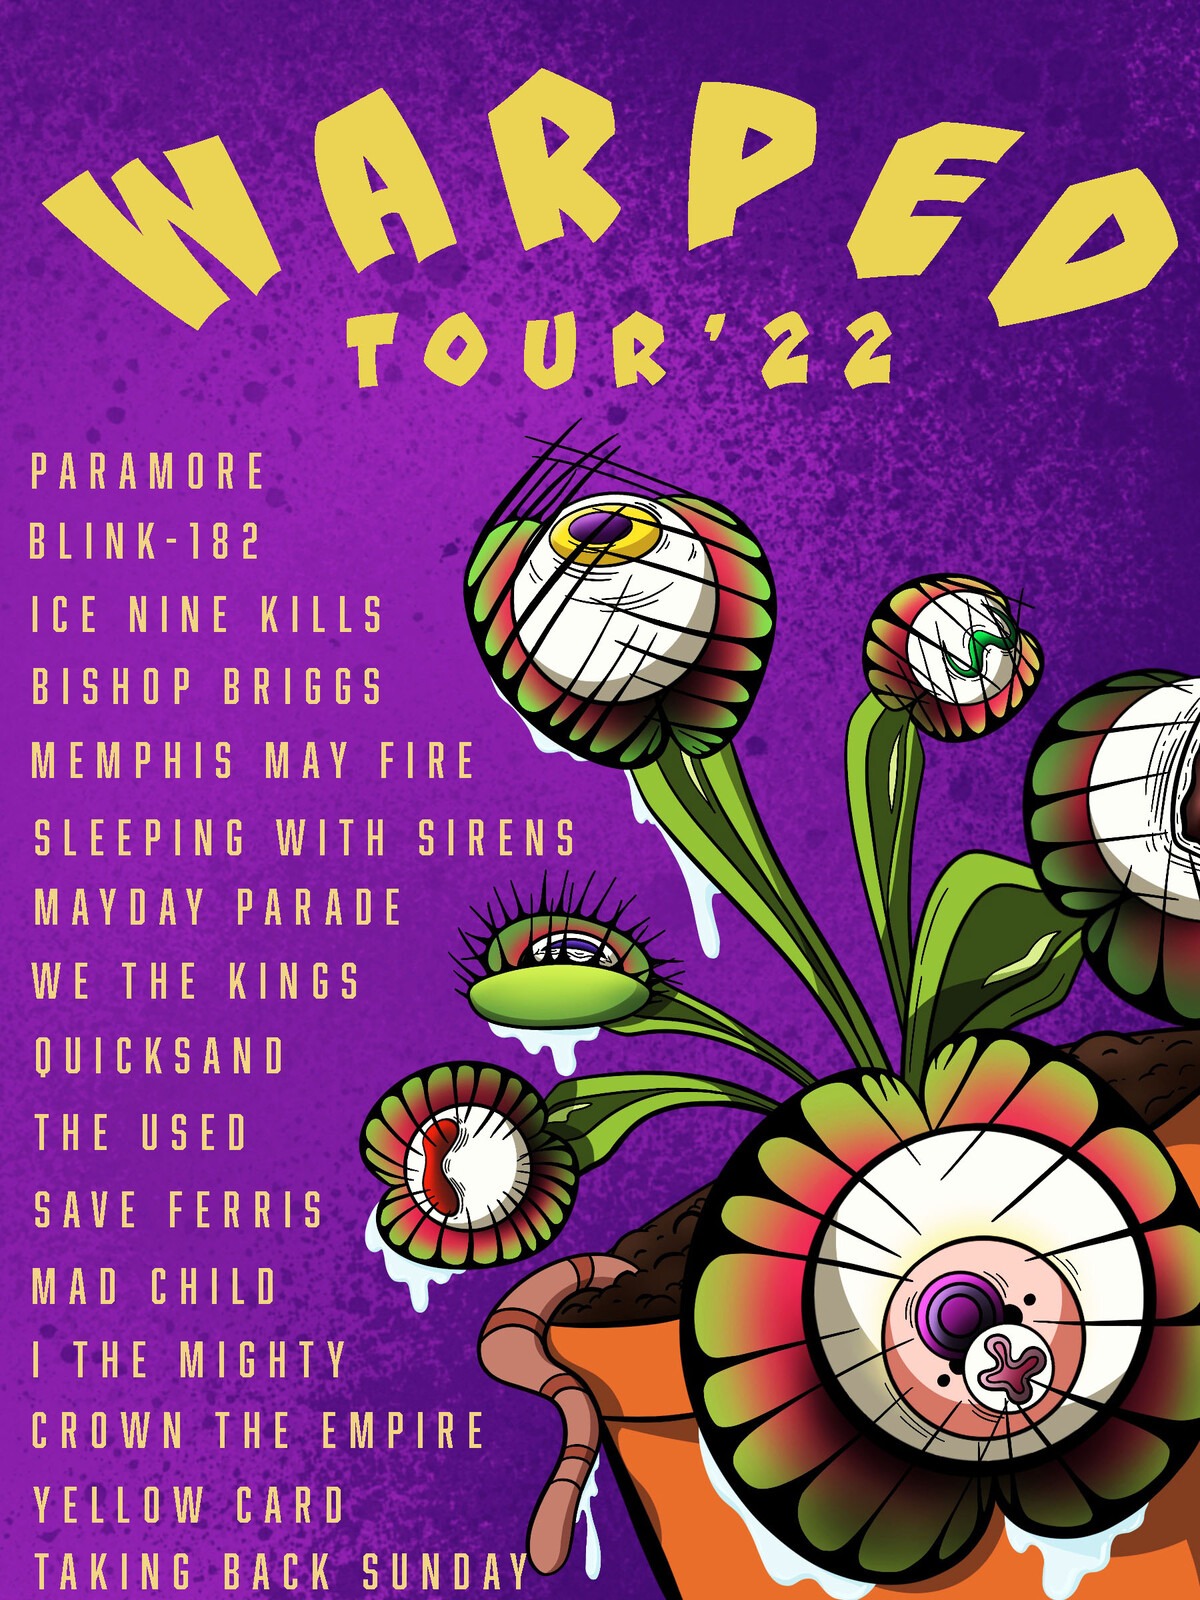 Venus Eye Trap
(Mock) Warped Tour Poster
2021